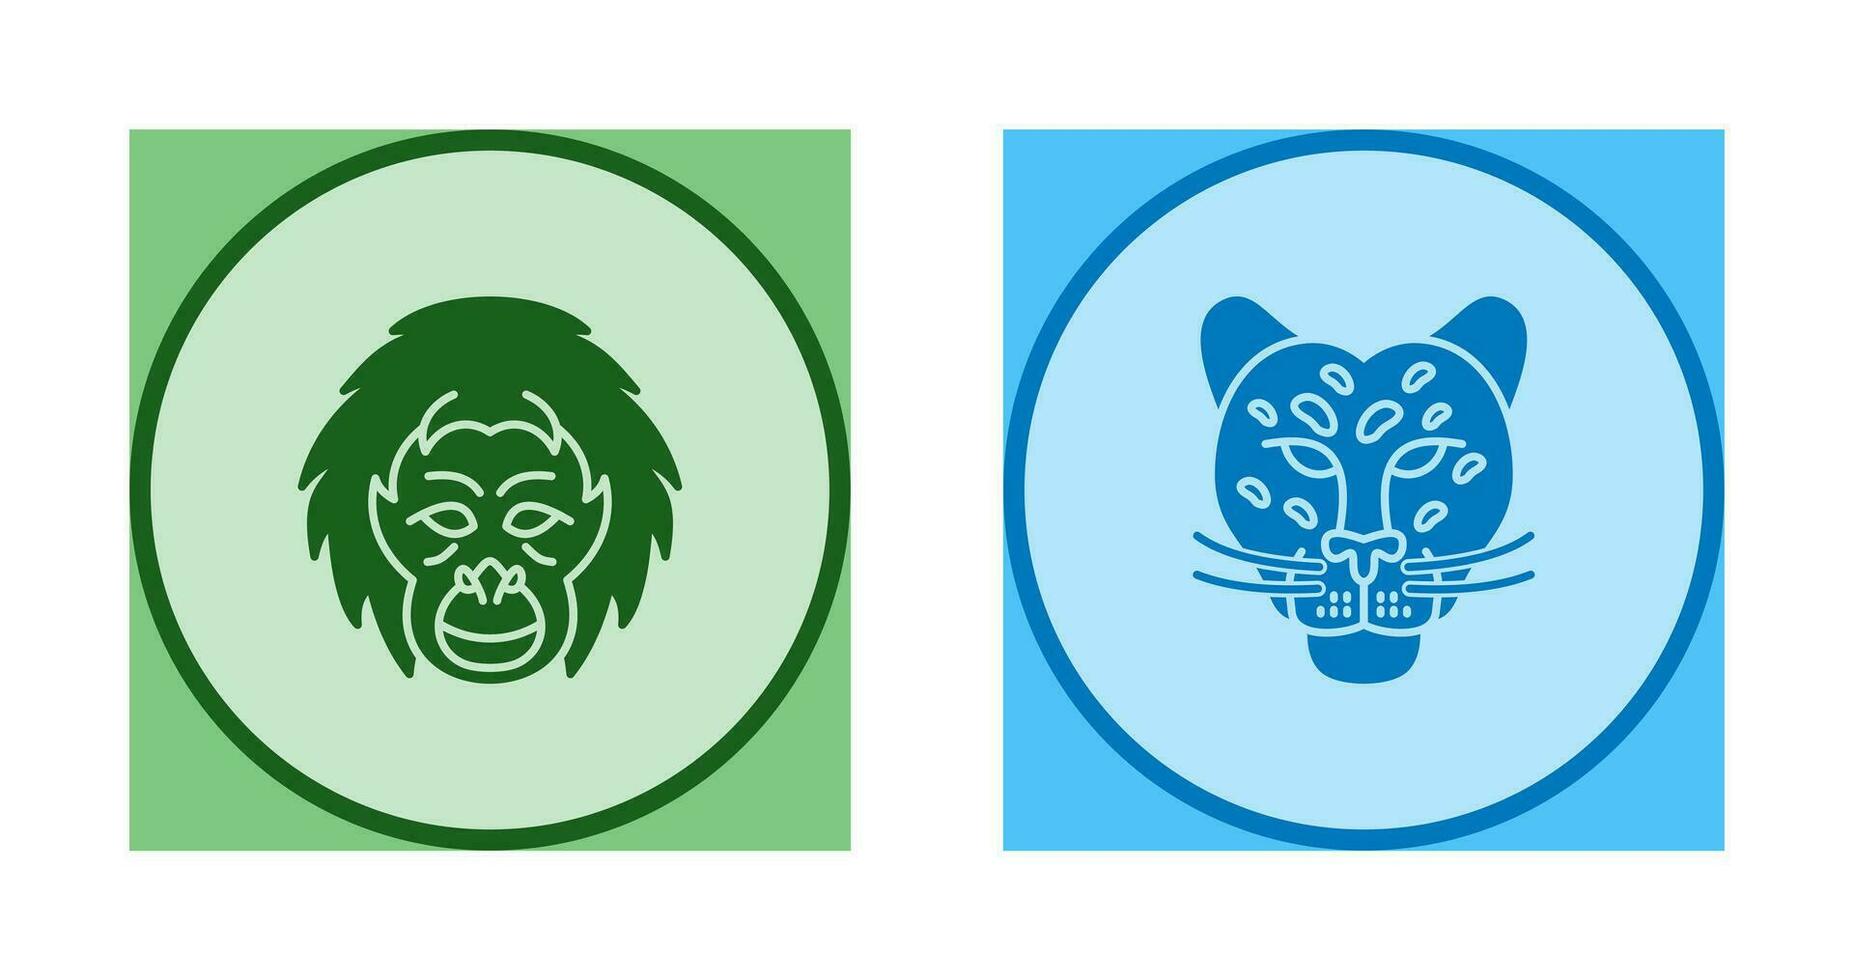 orangotango e perigoso ícone vetor